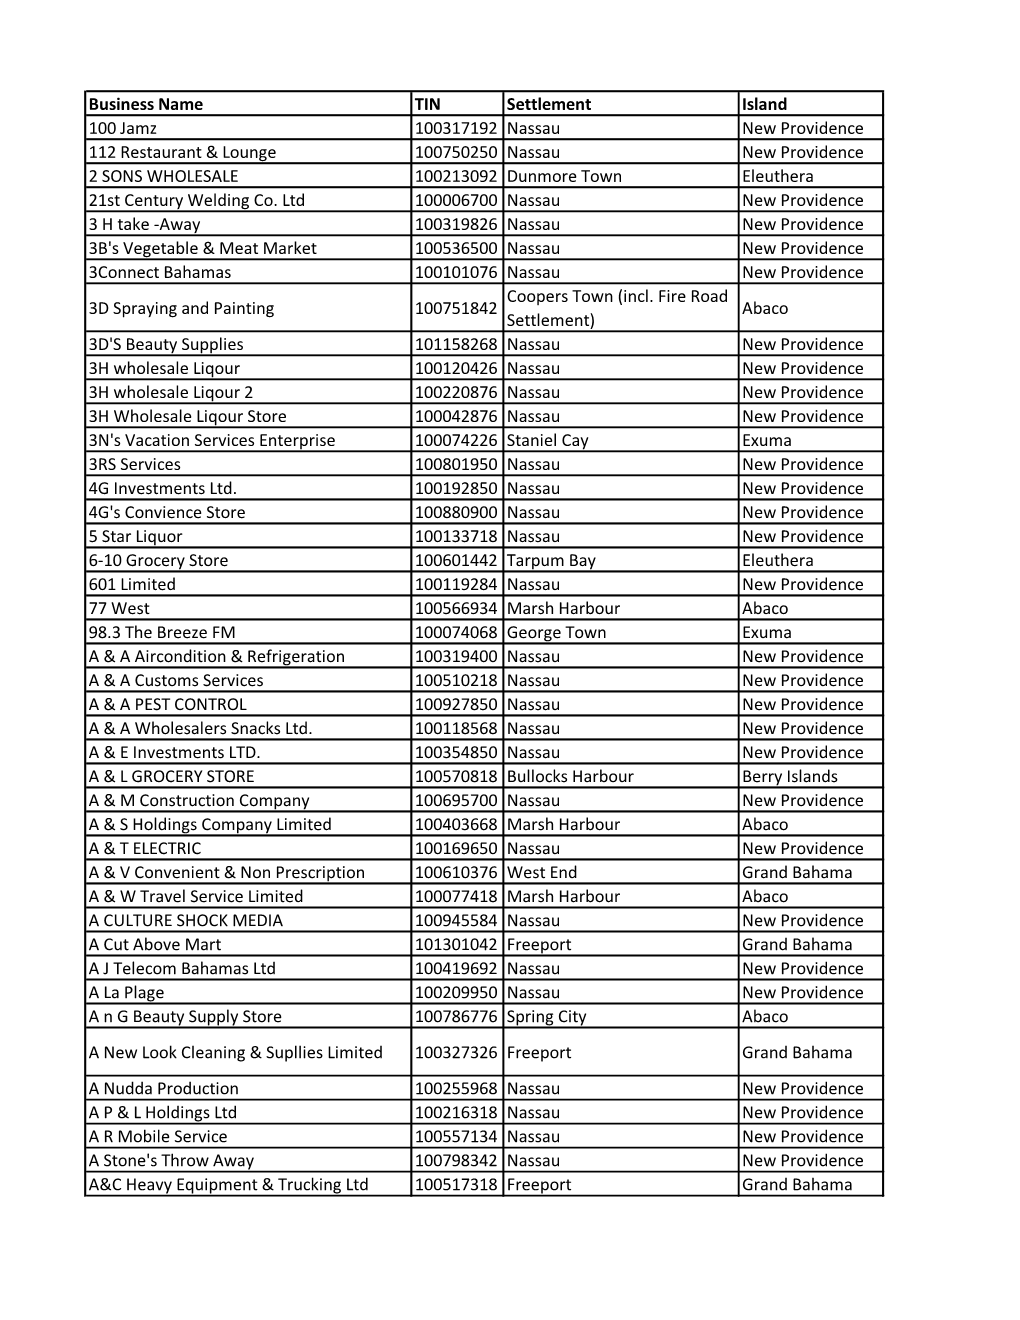 Taxpayers Registration List As at Nov 18 2015